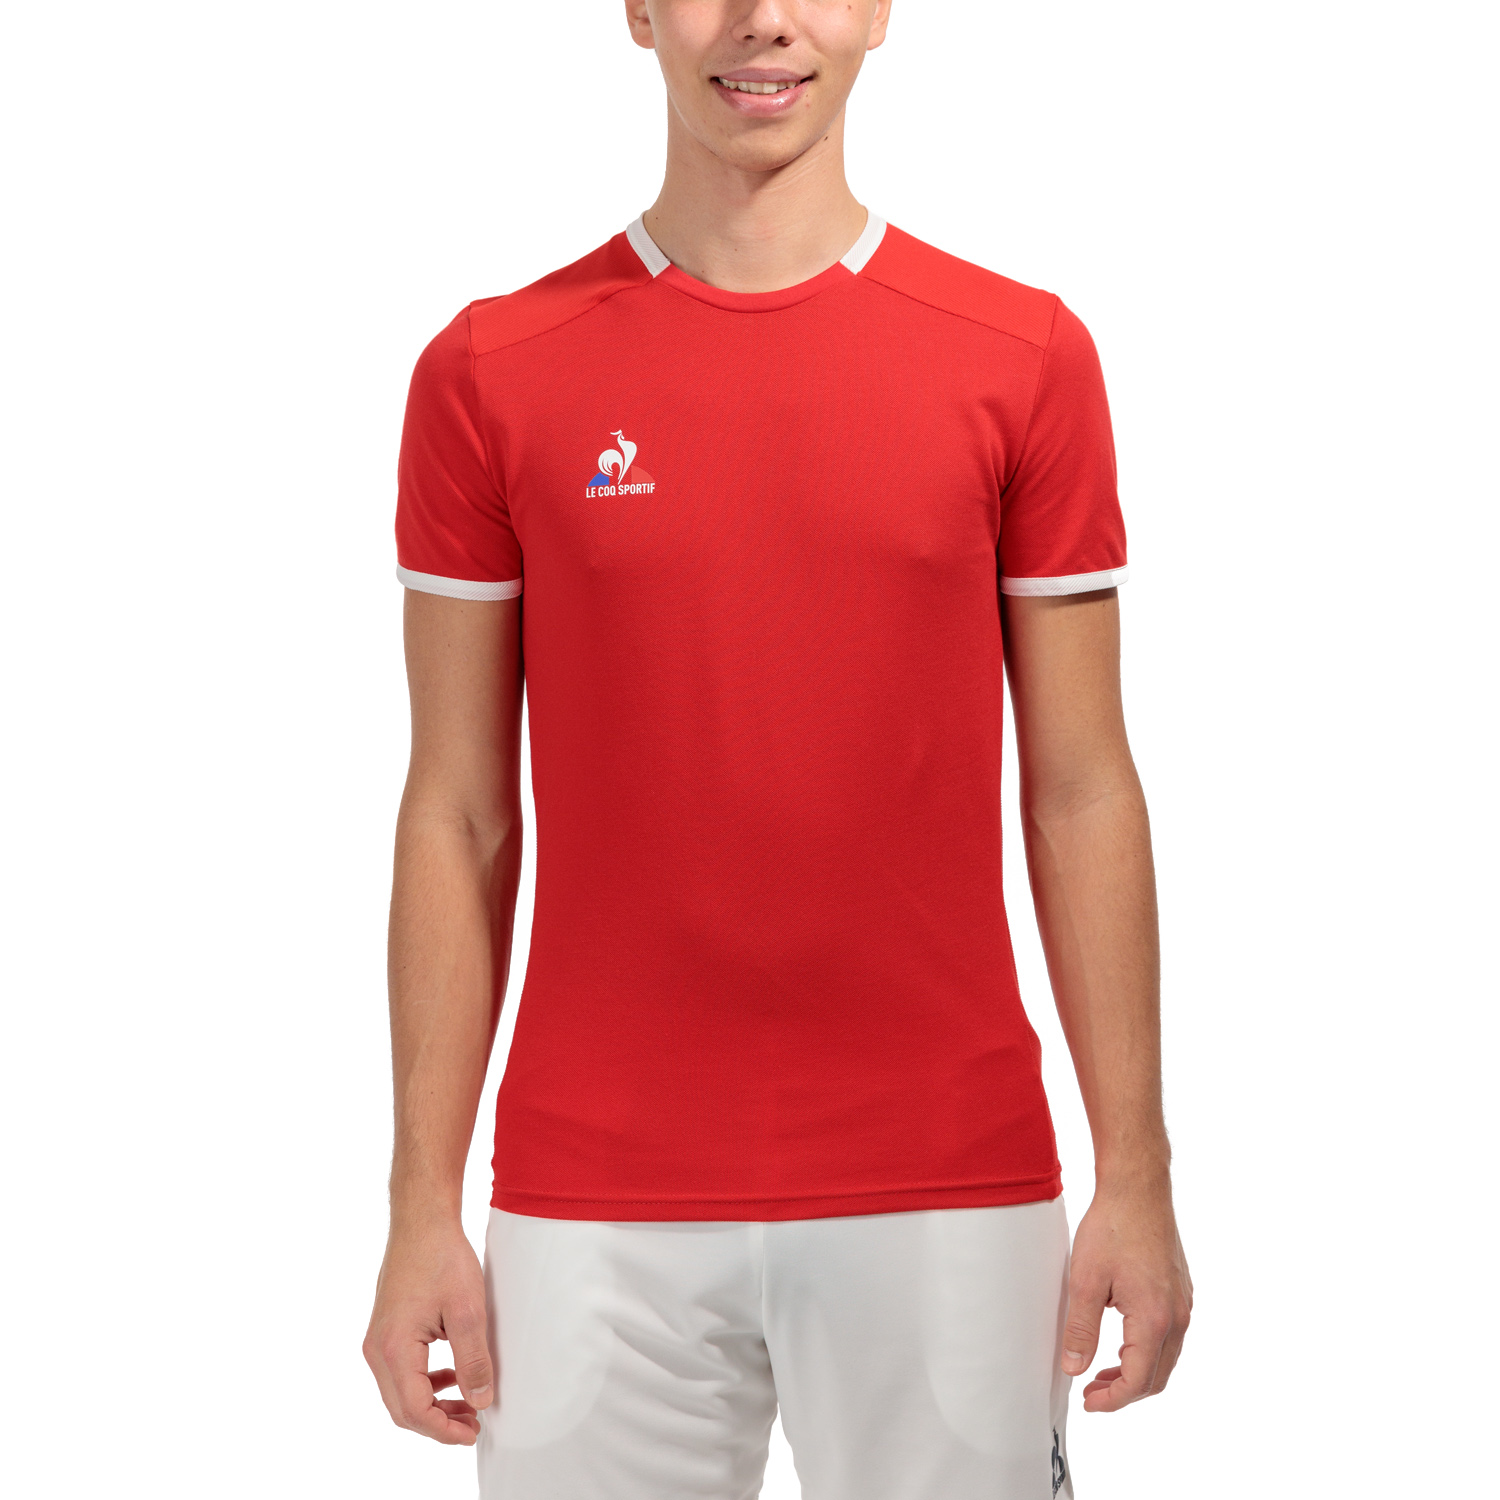 Le Coq Sportif Court T-Shirt - Pur Rouge/New Optical White